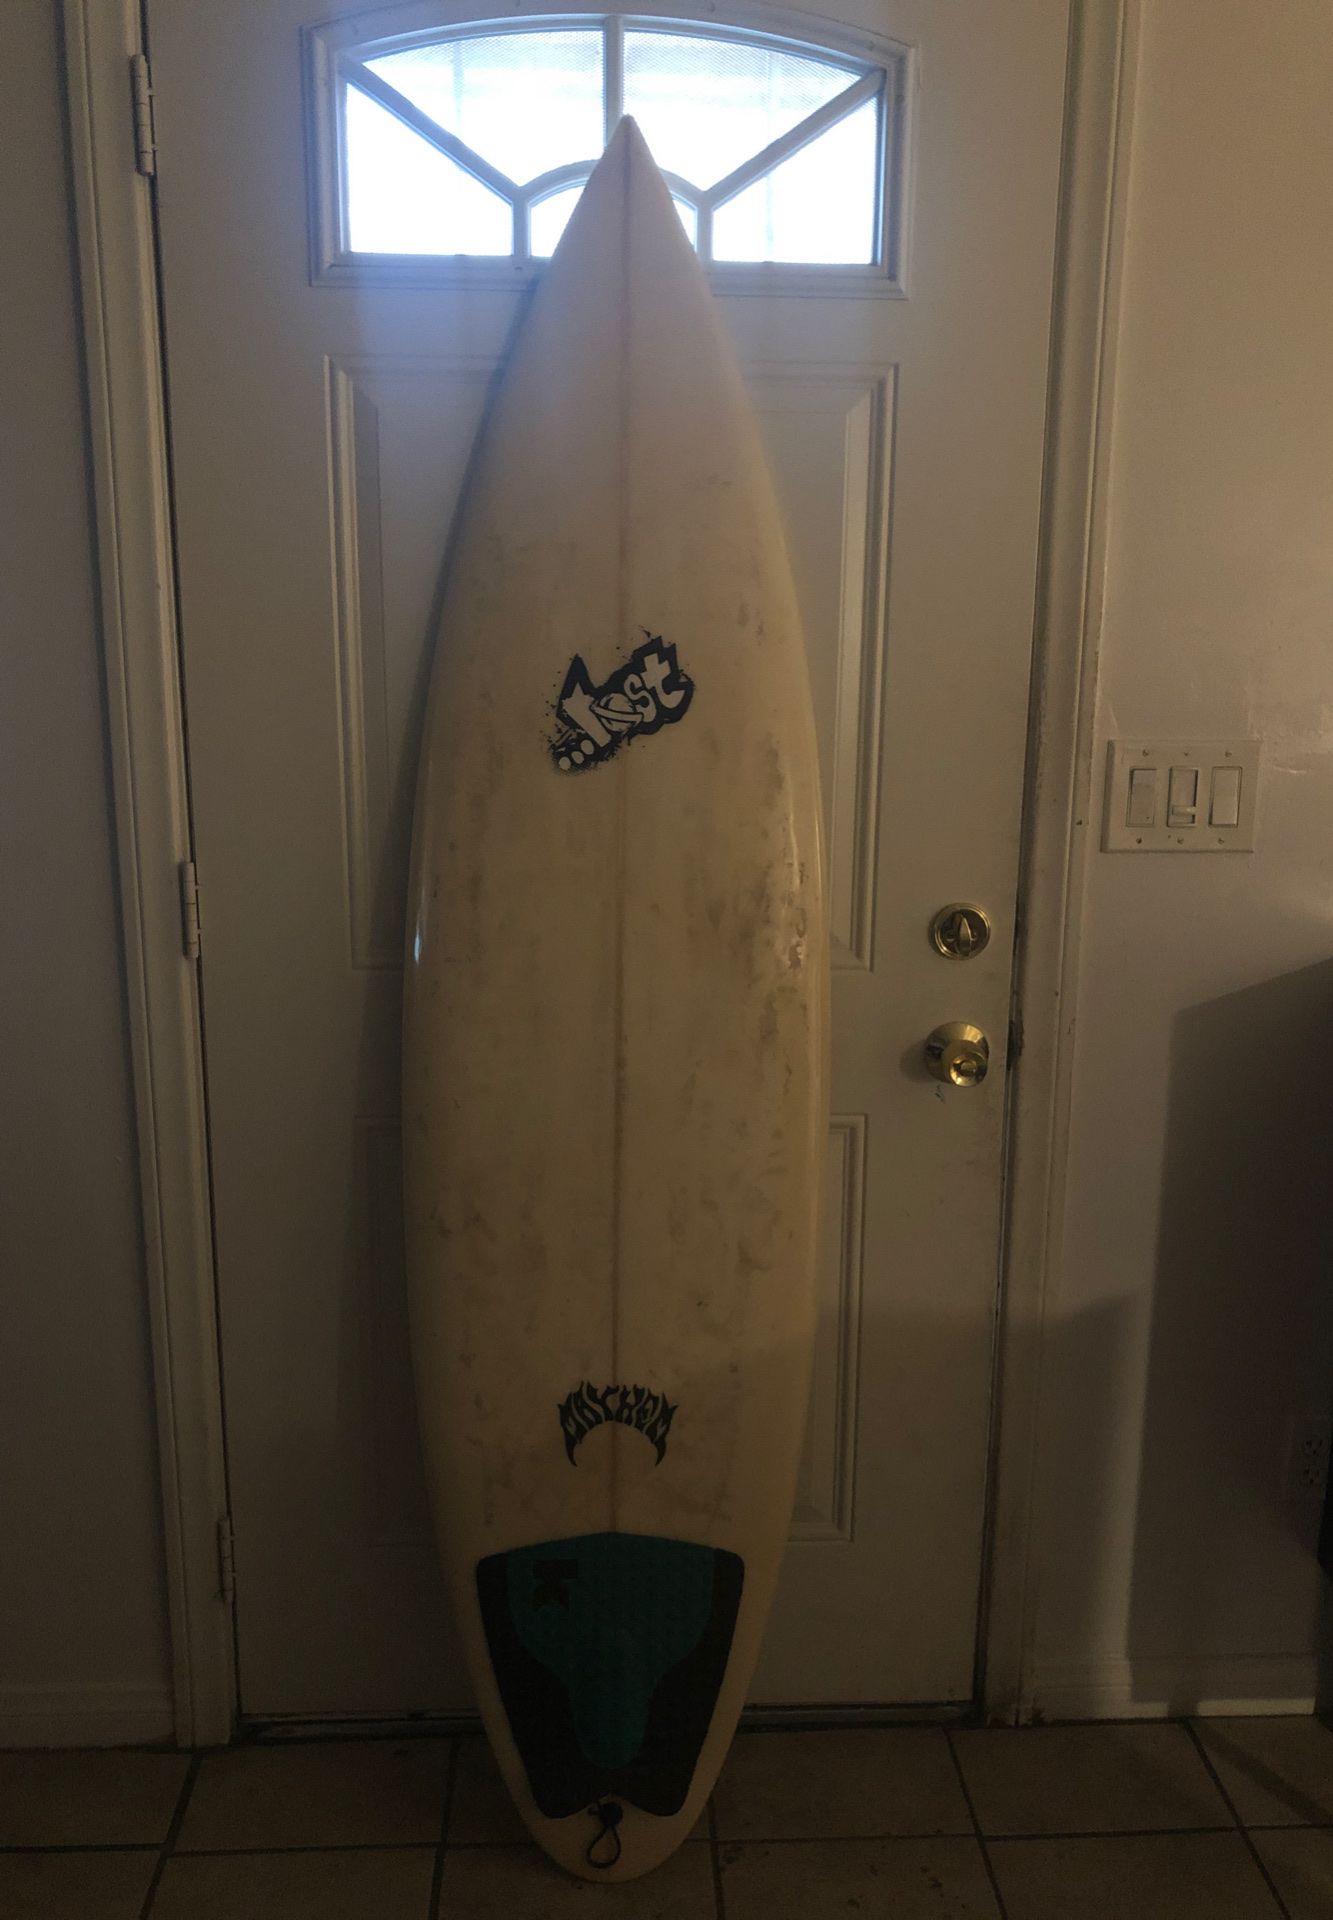 Lost mayhem surfboard